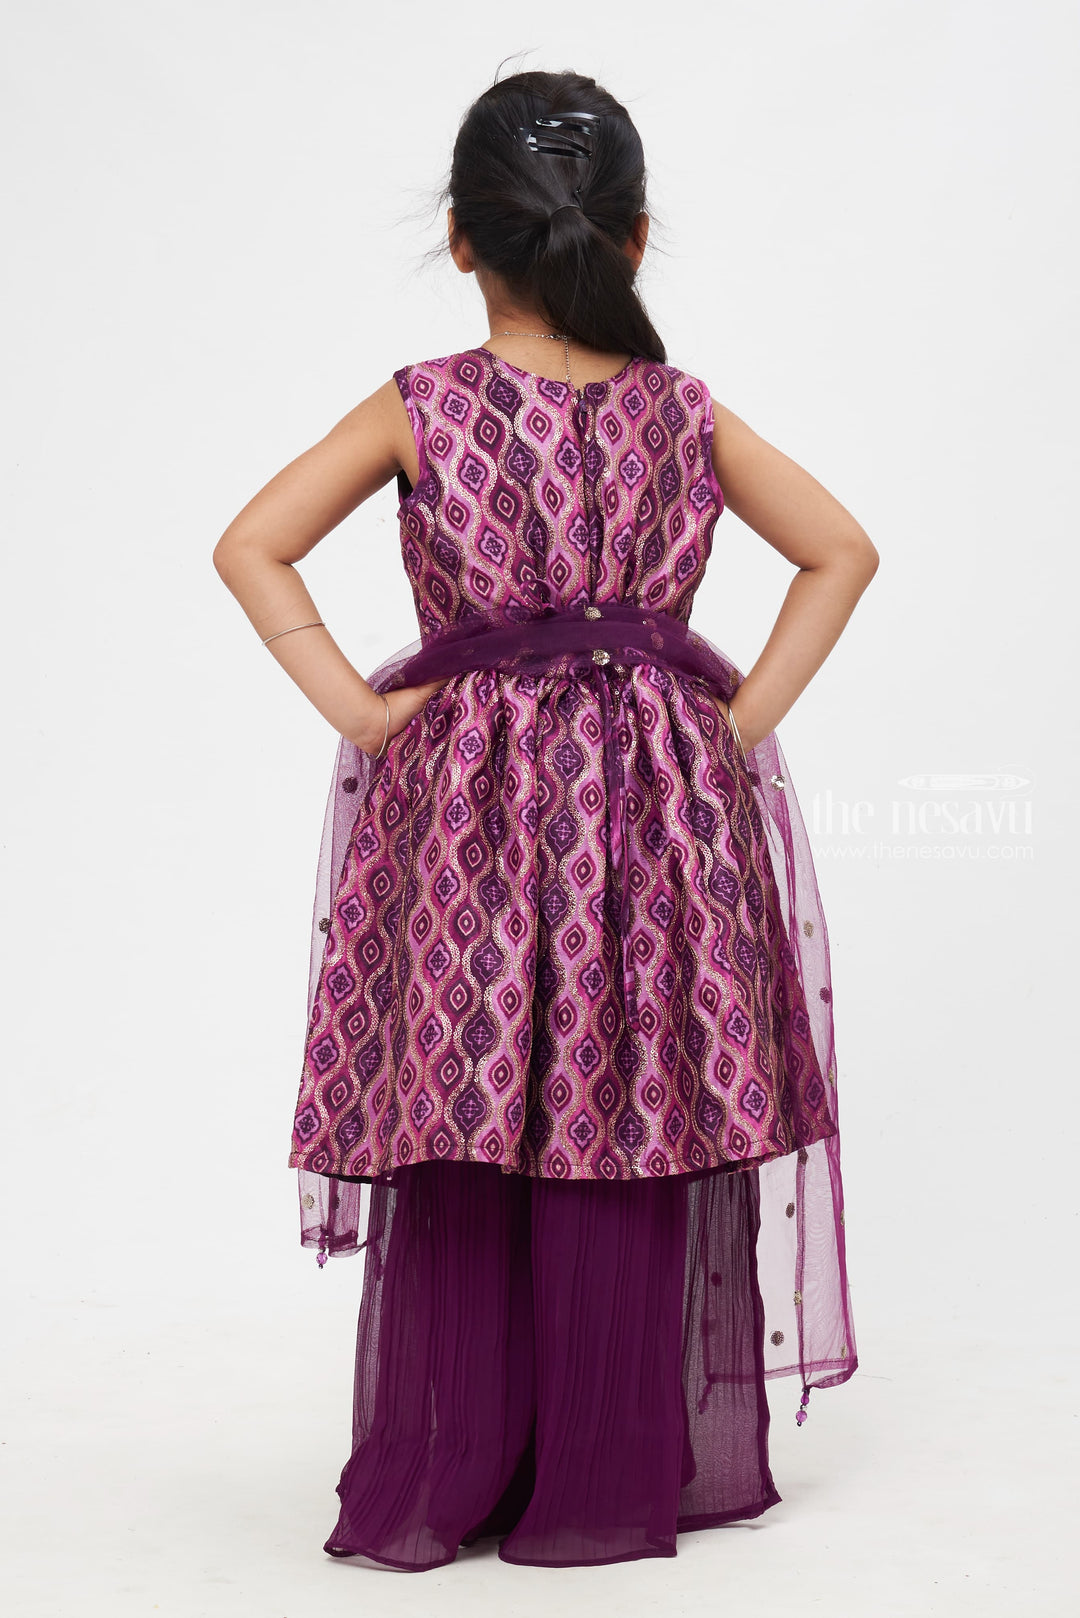 The Nesavu Girls Sharara / Plazo Set Elegant Purple Patterned Dress with Flared Palazzos for Girls Nesavu Swirling Patterned Purple Dress with Palazzos | Kids Festive Wear | Elegant Girls Outfit Collection